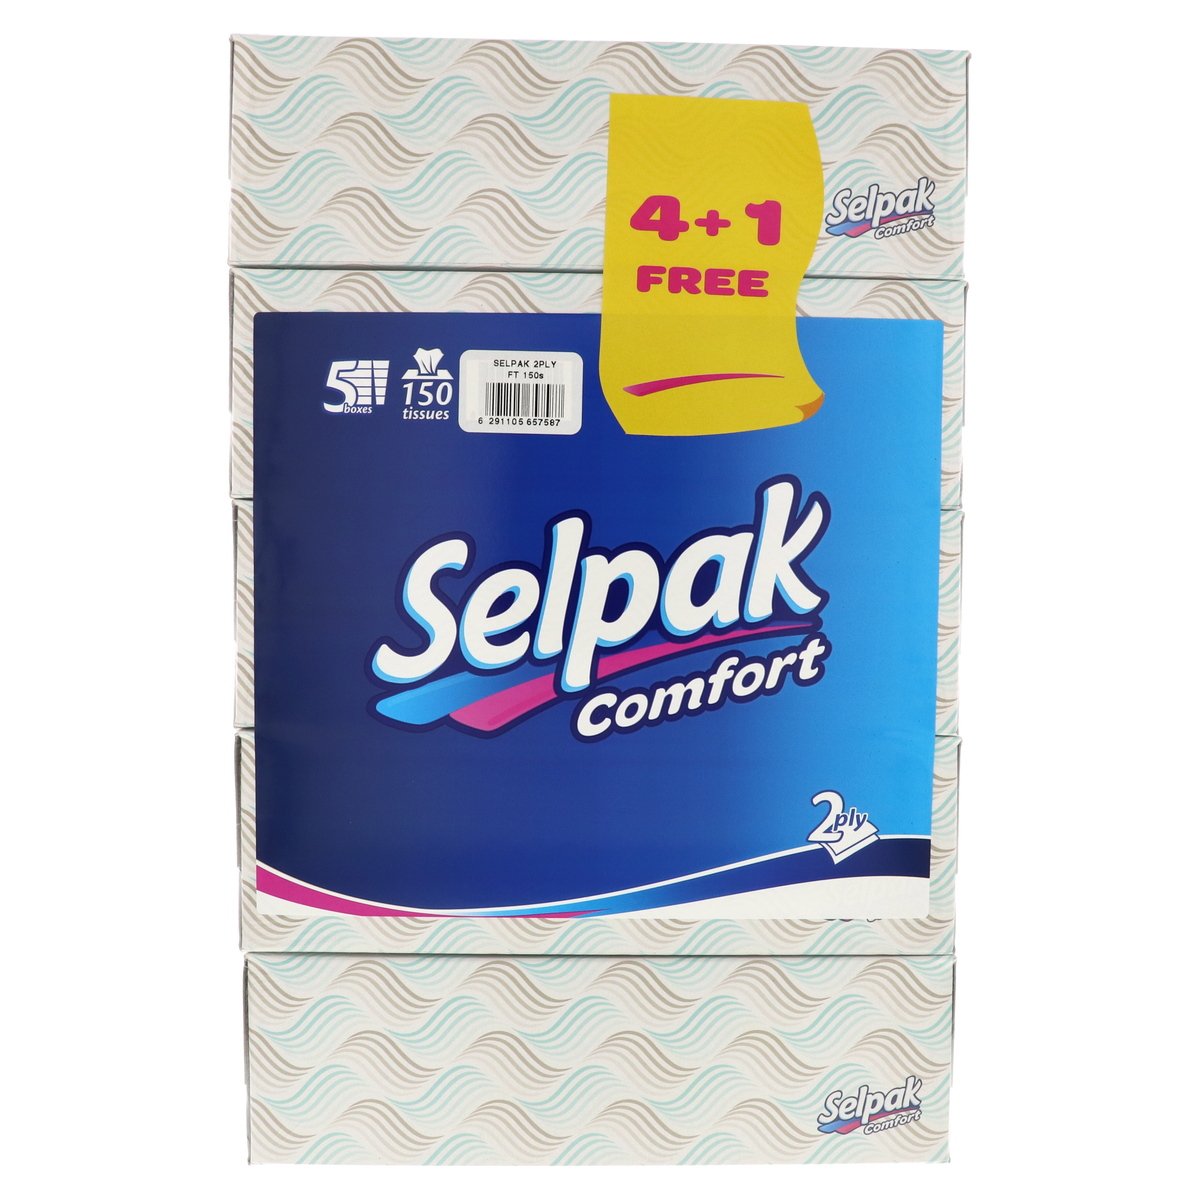 Selpak Comfort Facial Tissue 150 Sheets x 2Ply 4+1